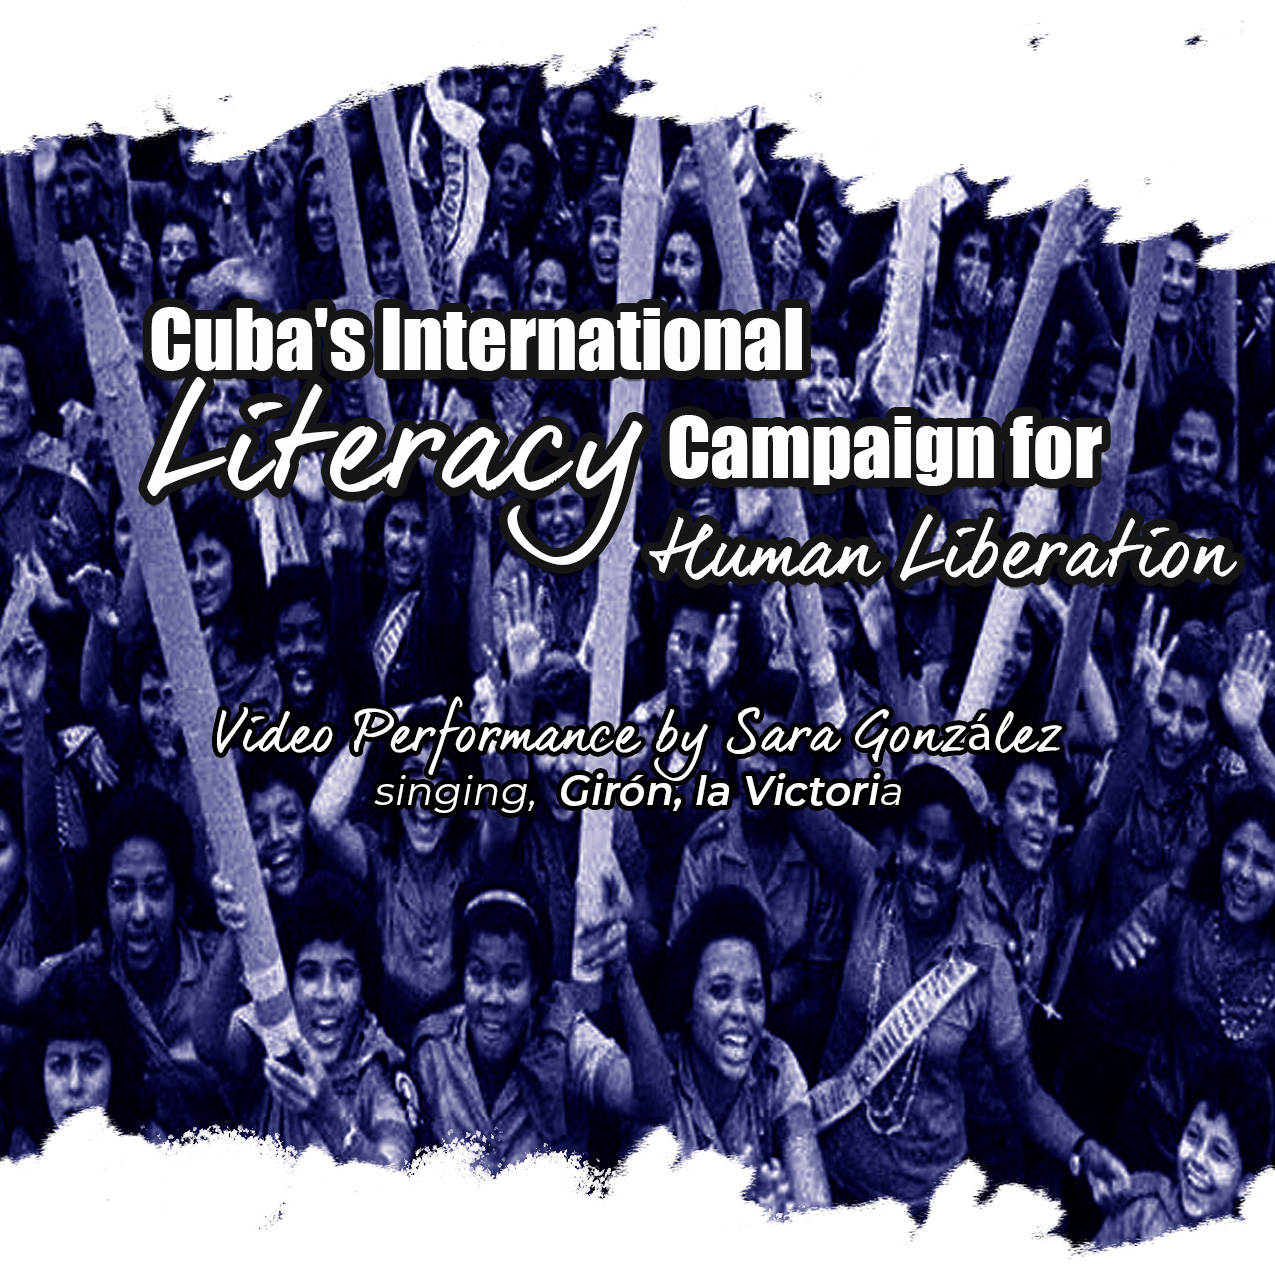 Cuban International Literacy Campaign for Human Liberation